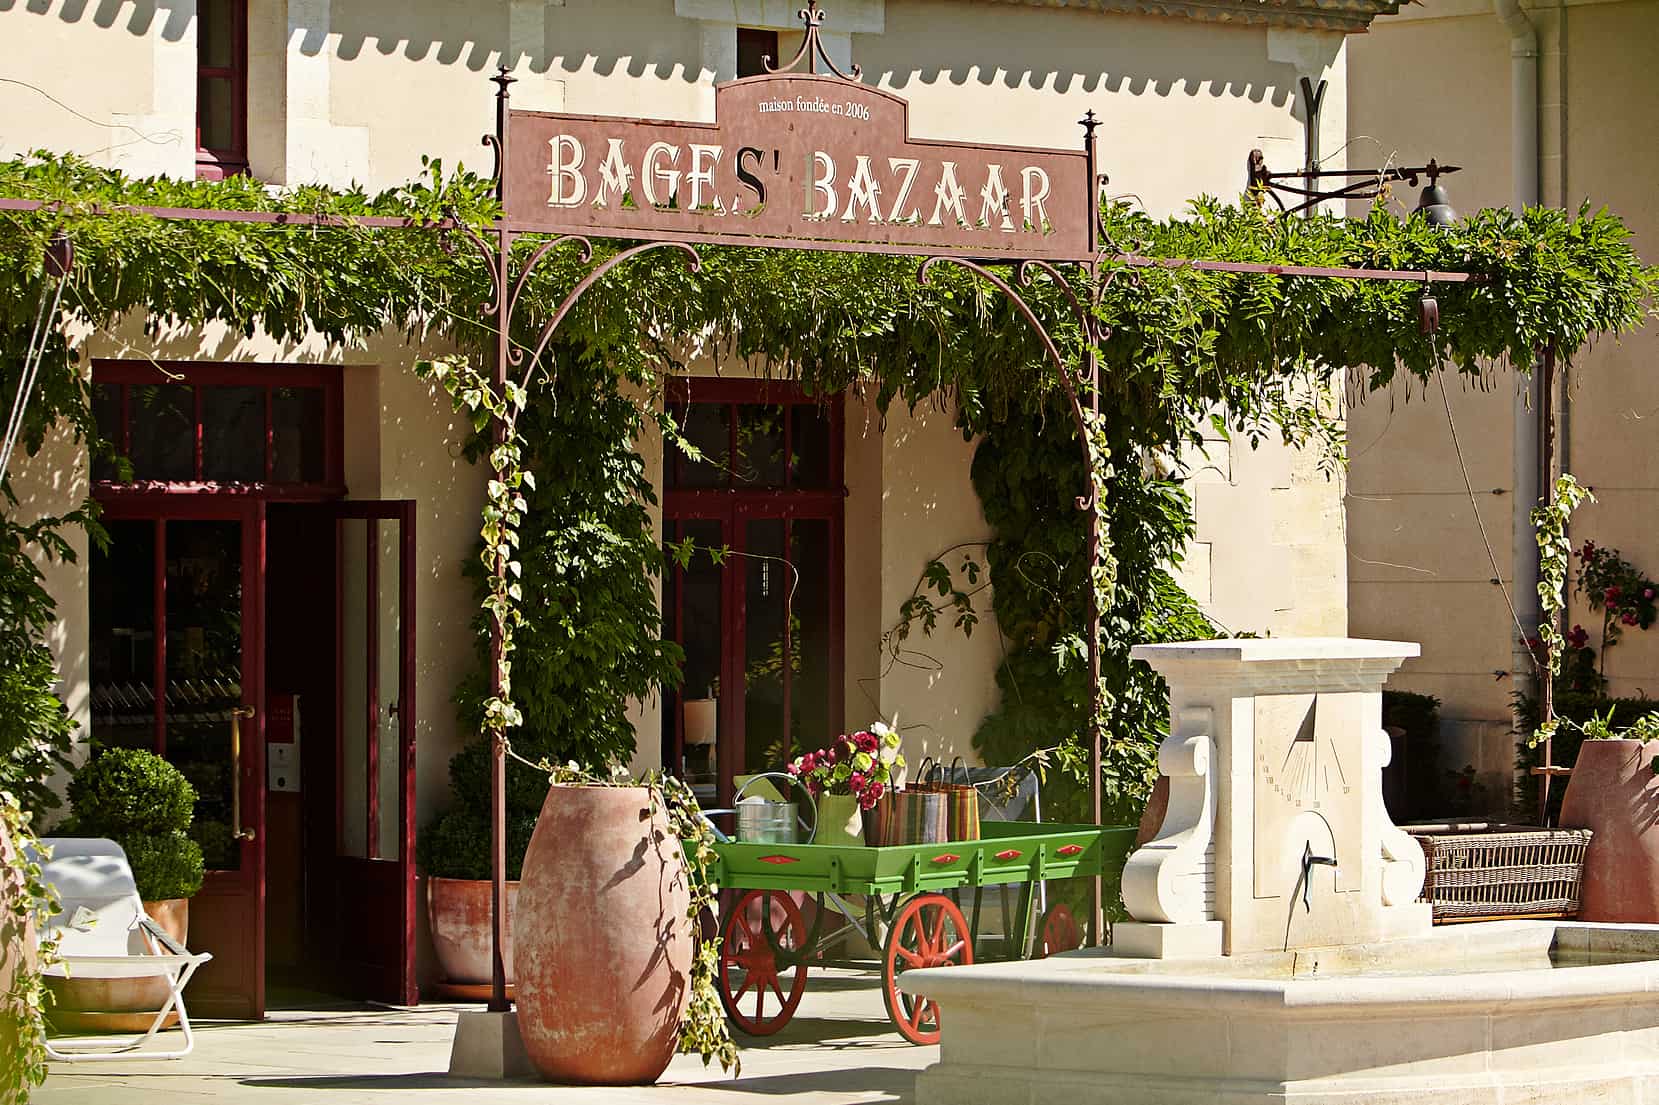 Bages Bazaar in Bordeaux France